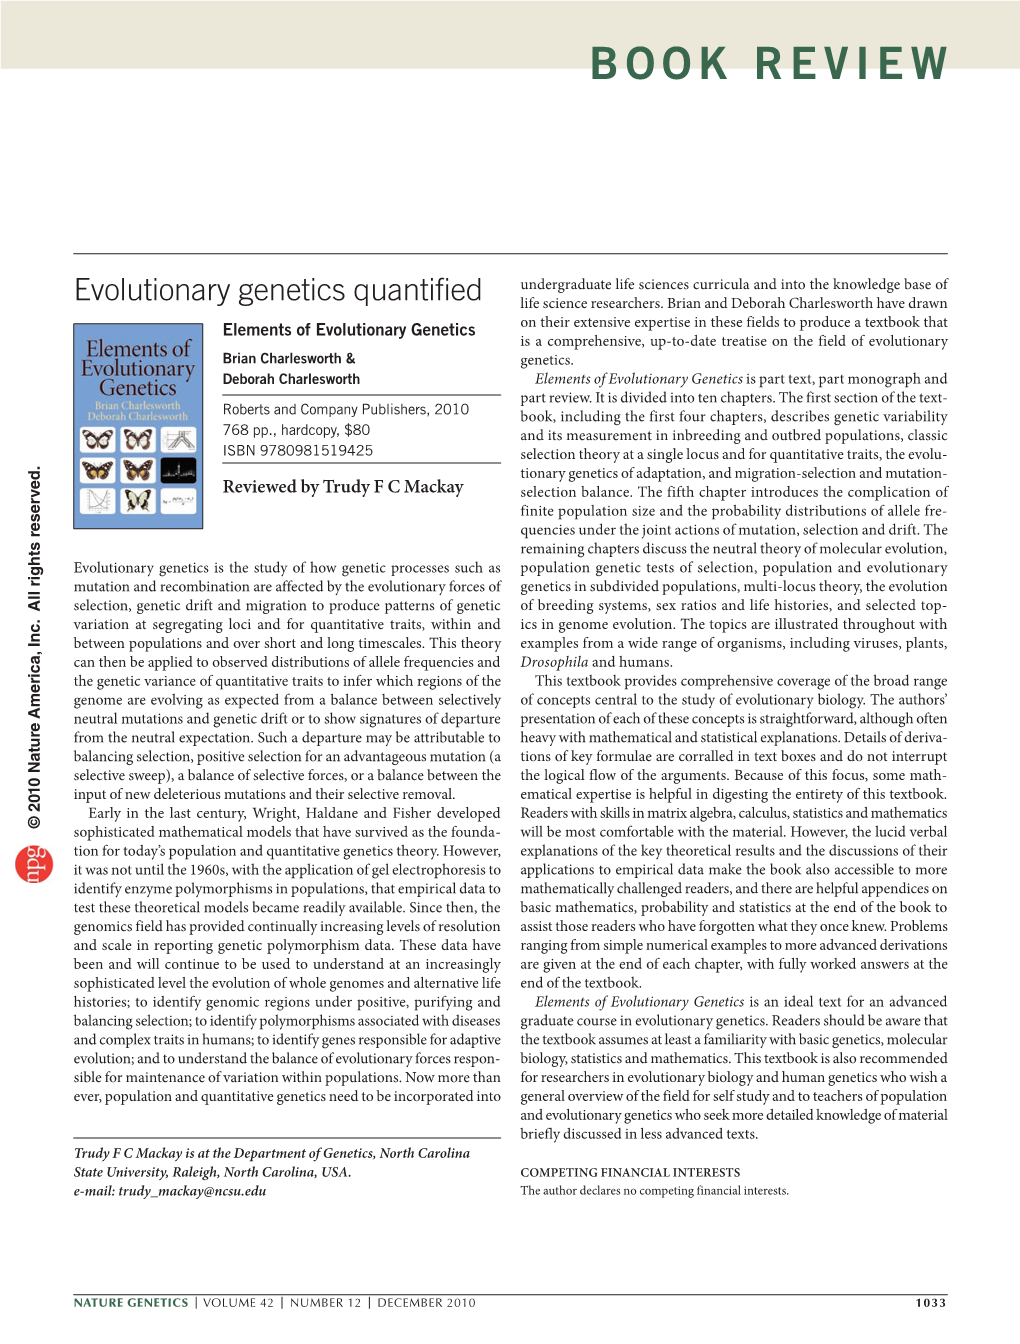 Evolutionary Genetics Quantified Nature Genetics E-Mail: State University, Raleigh, North Carolina, USA